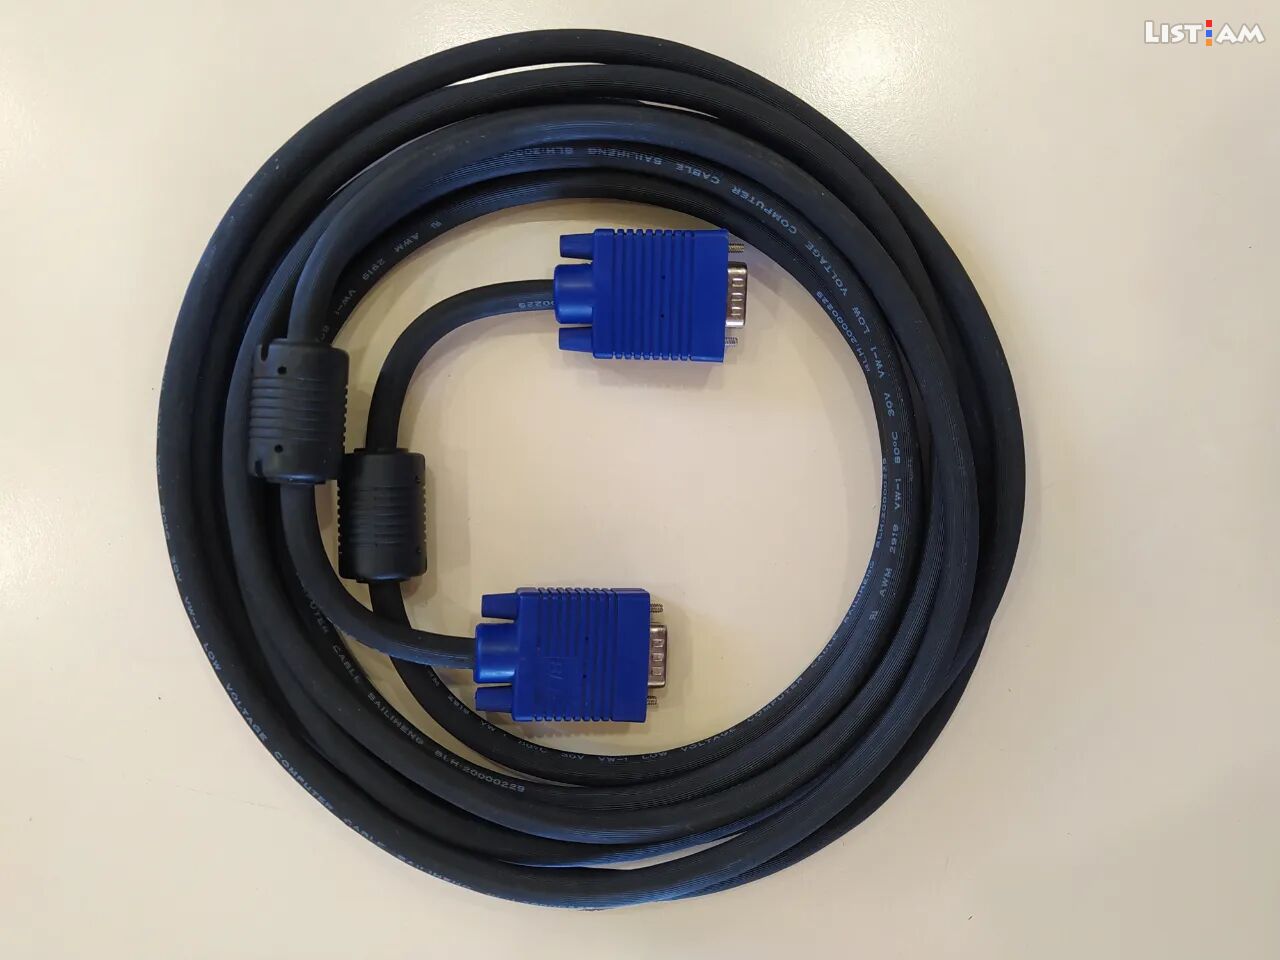 VGA cable 5 m